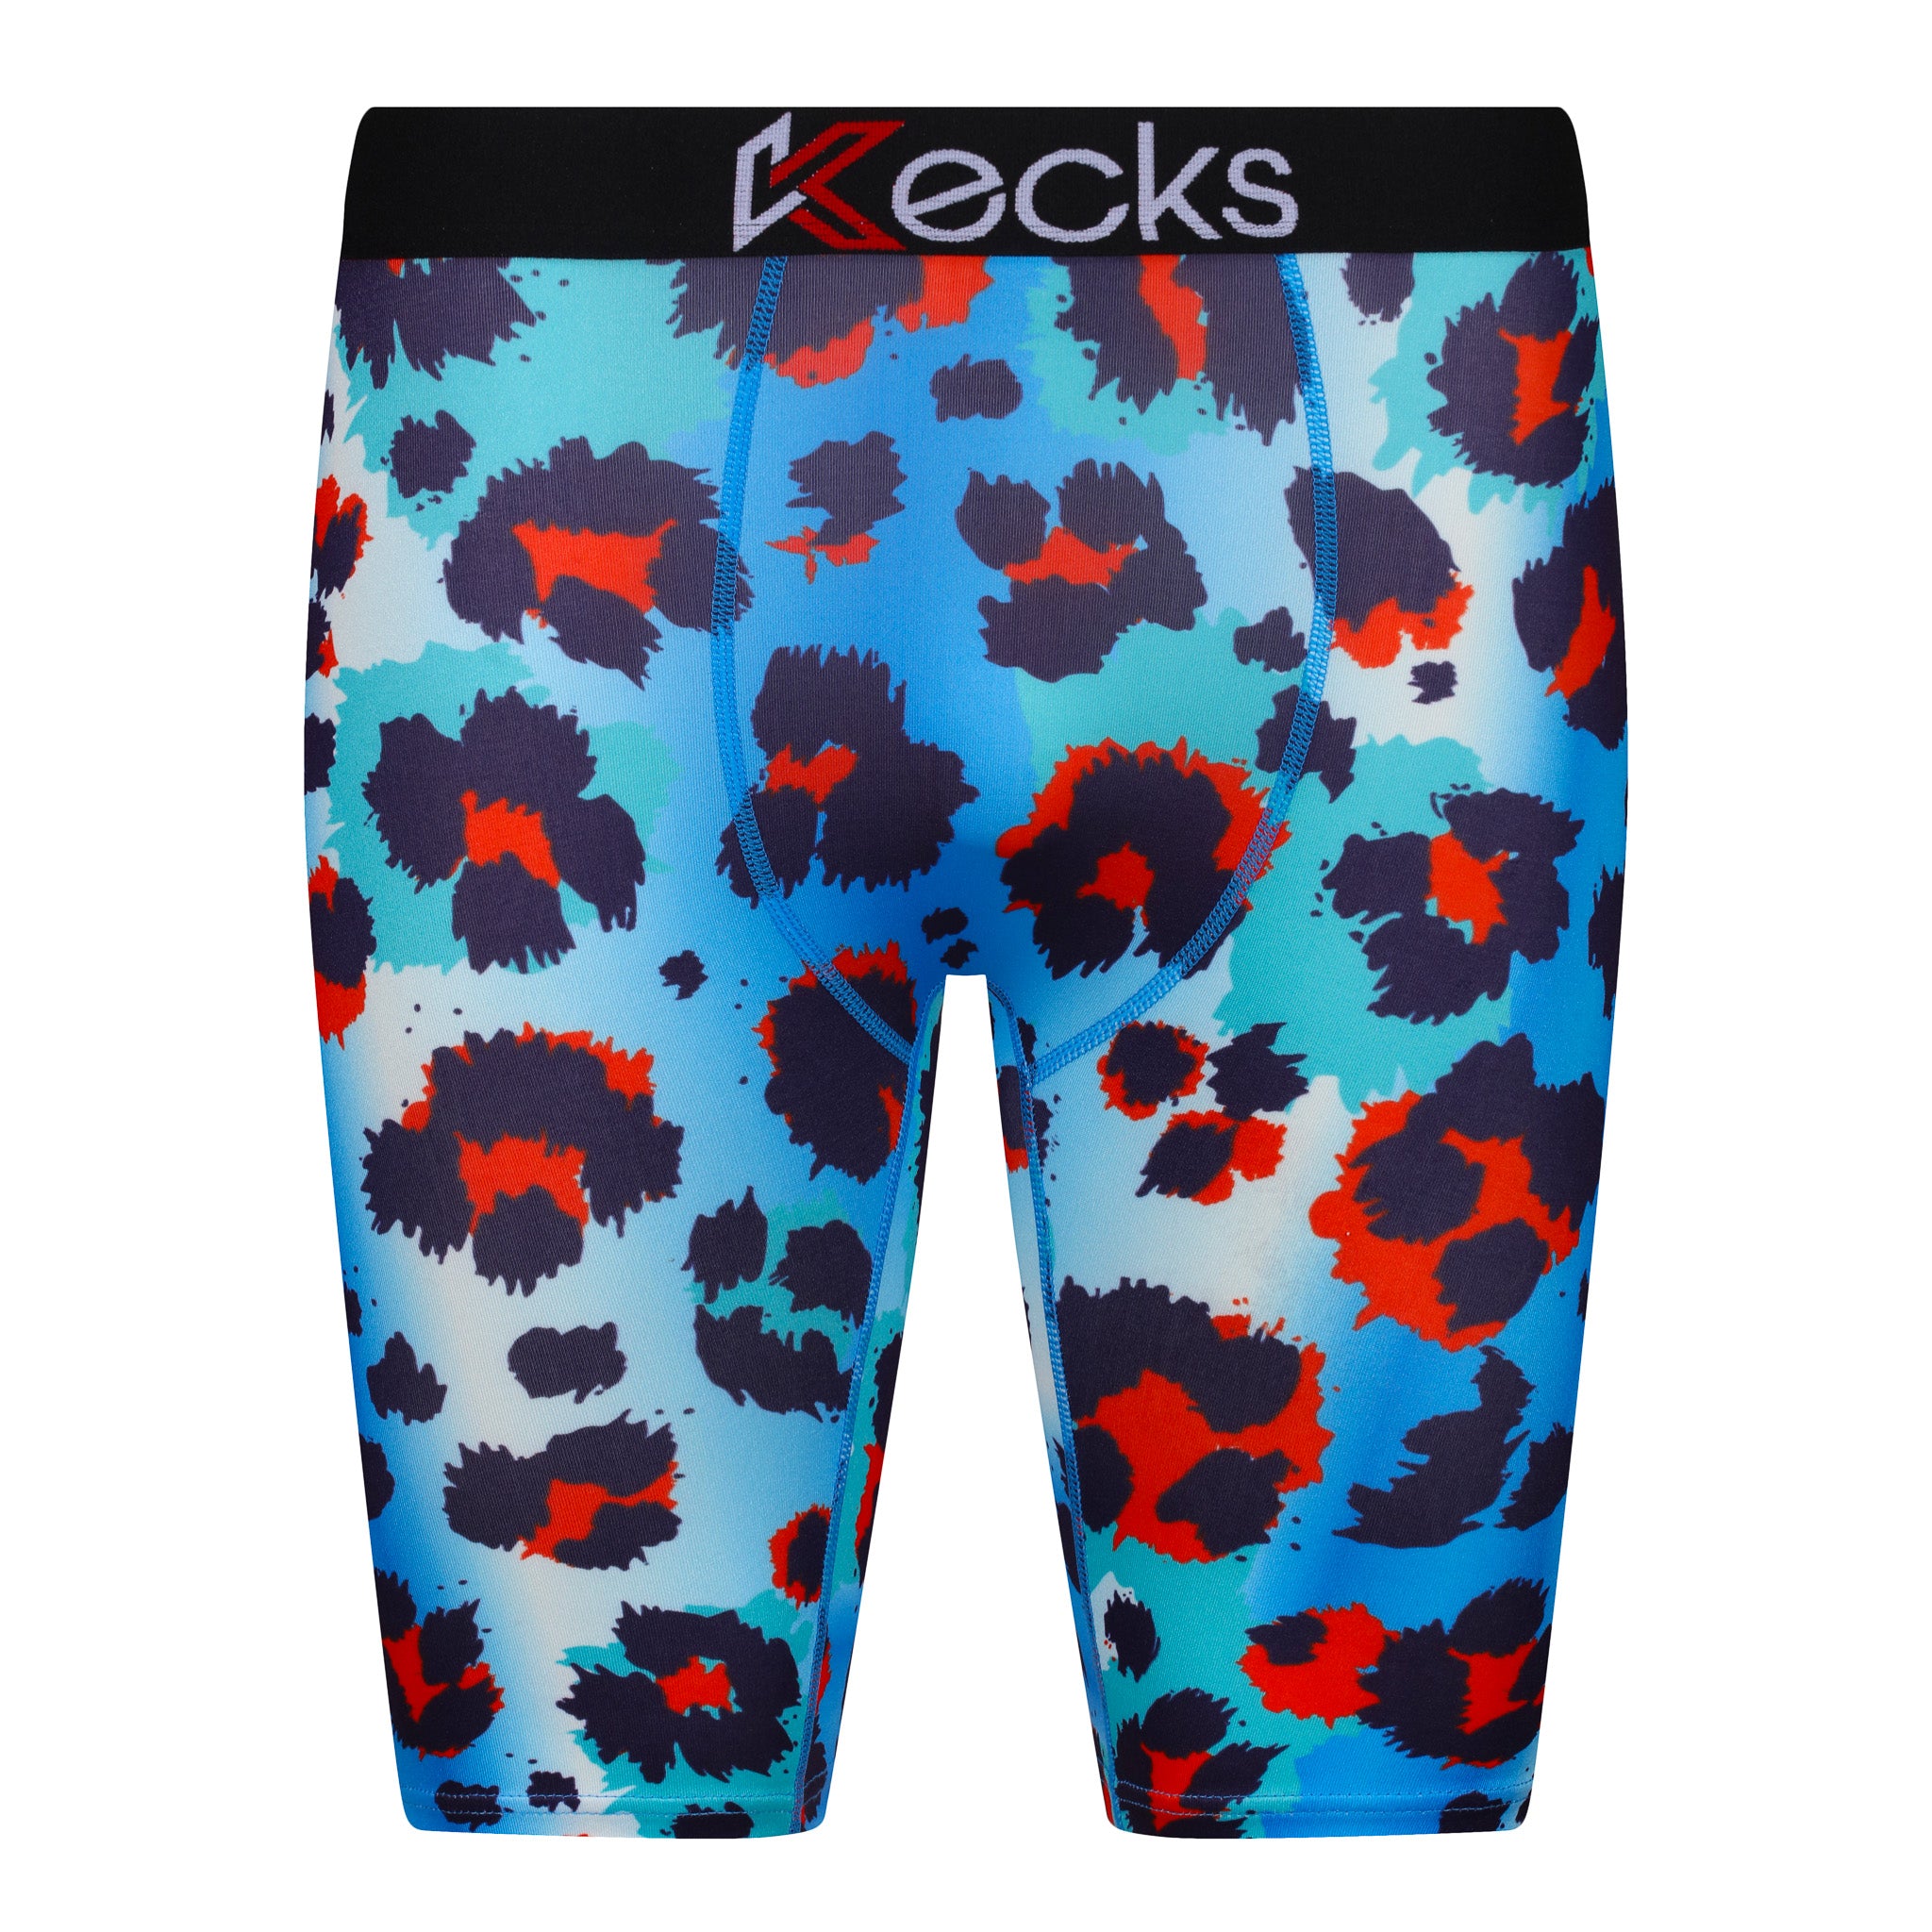 Kecks Jagged Edge Print Boxer Shorts Underwear Boxer Shorts